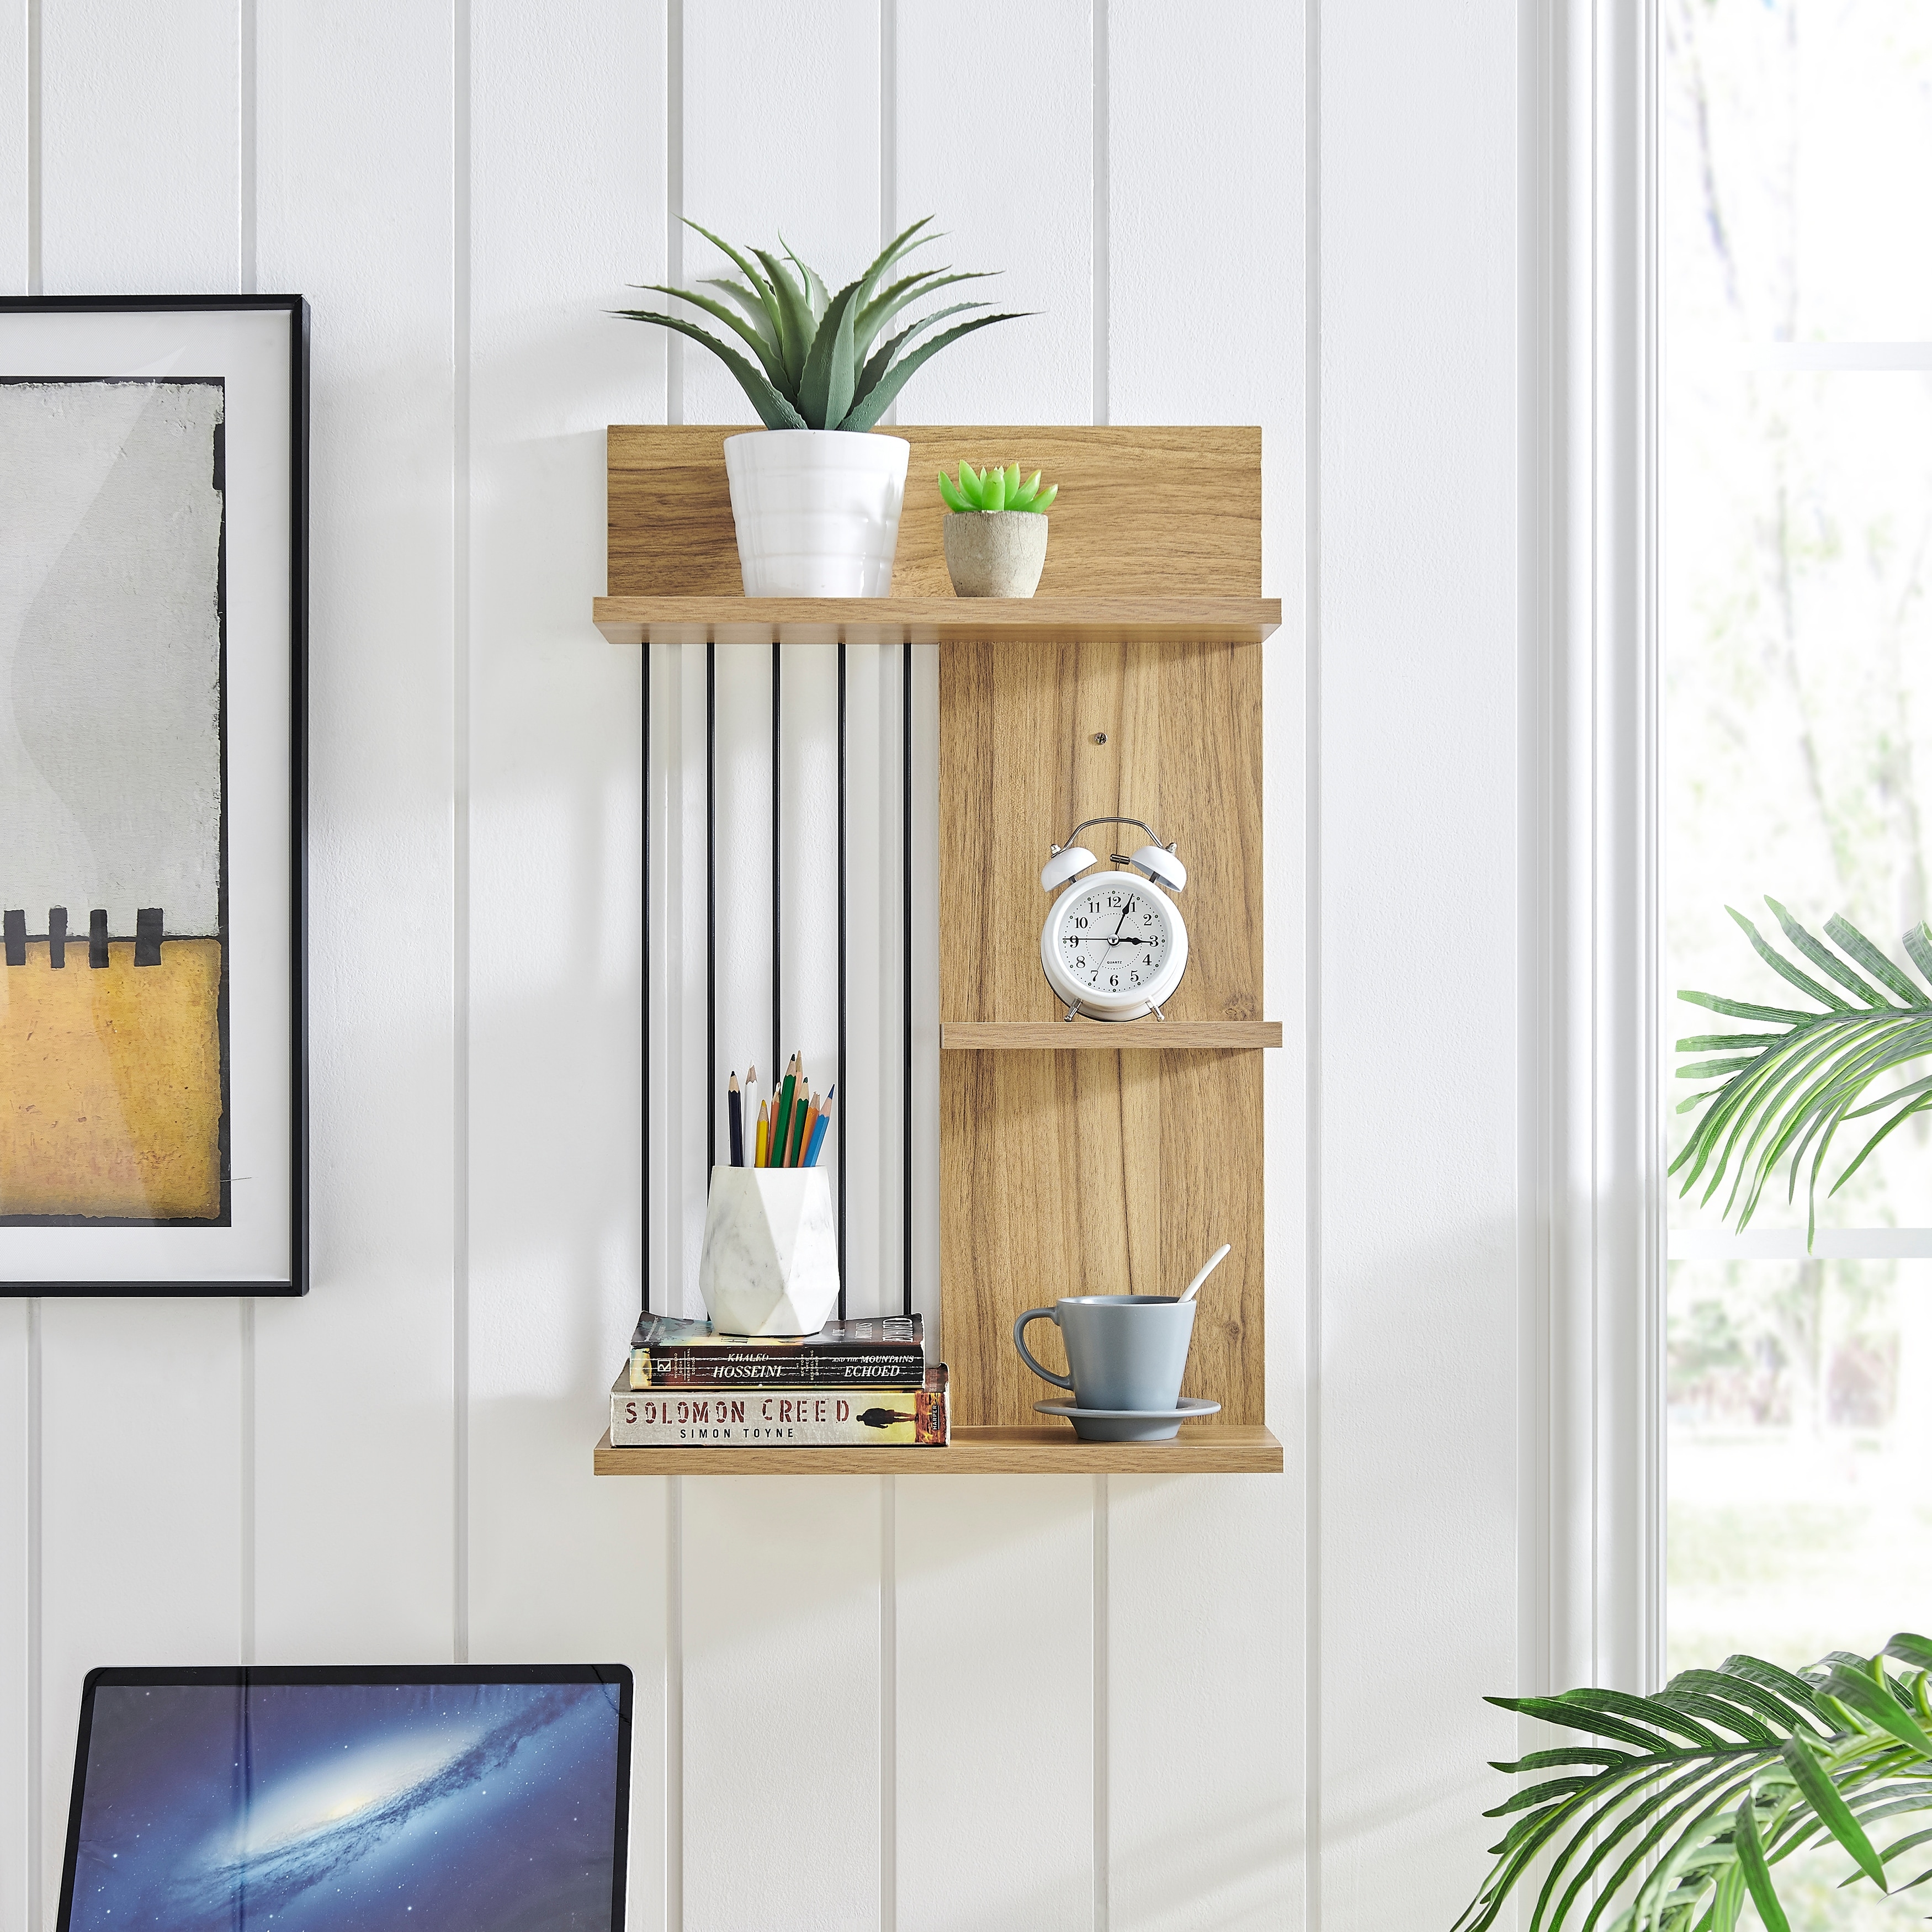 Danya B Two-Tier Ledge Shelf Wall Organizer with Five Hanging Hooks - White, Size: 16 inch x 29 inch